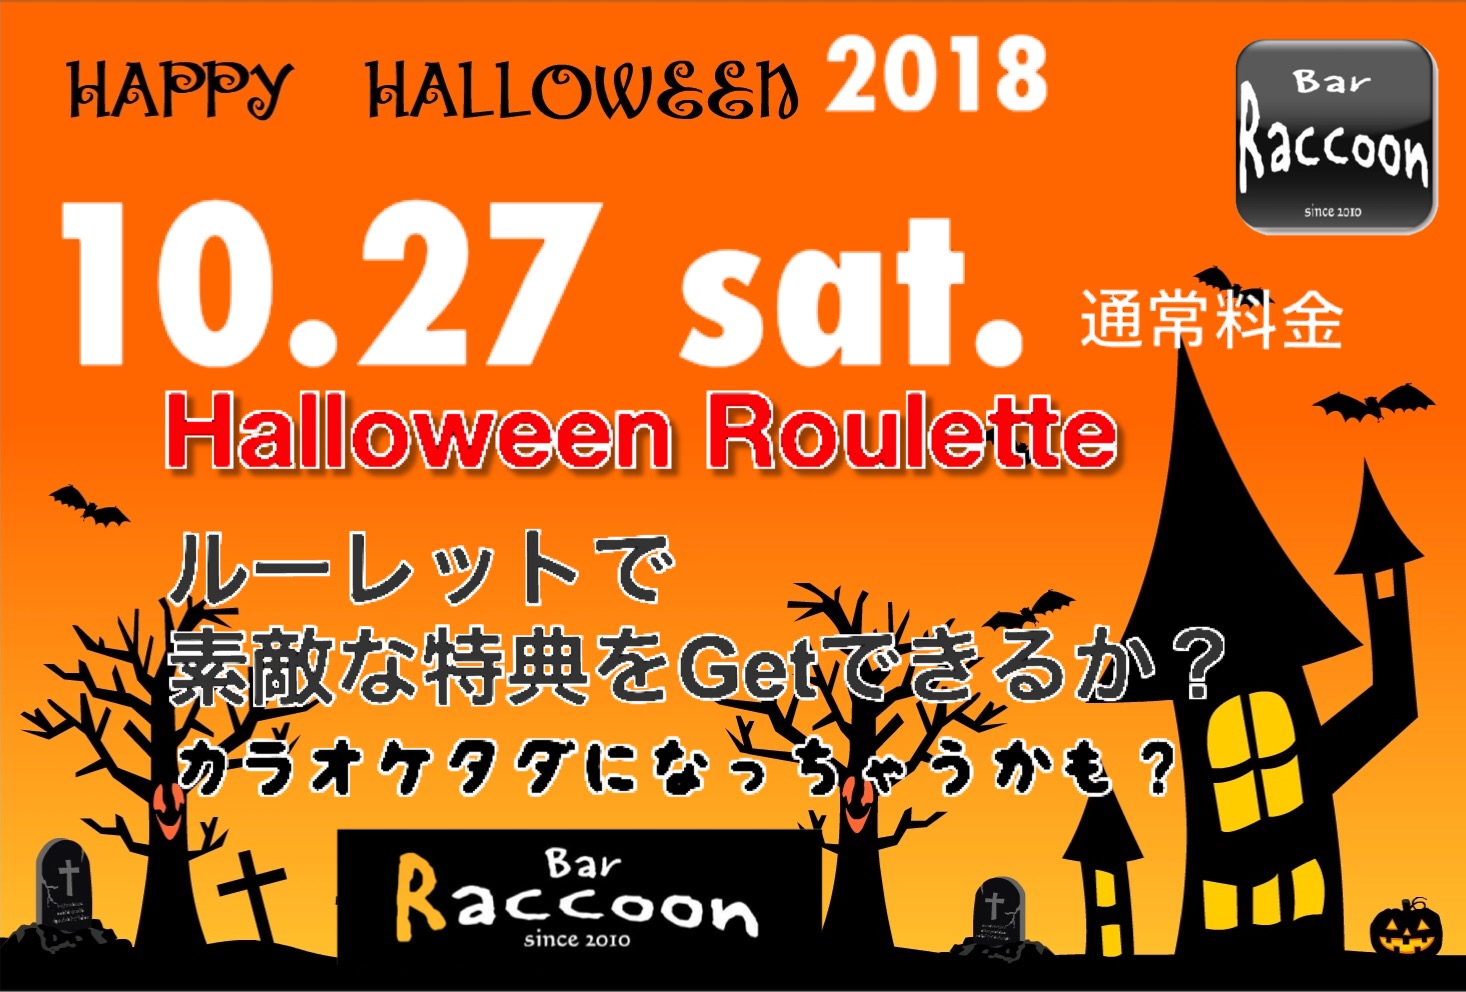 Raccoon’s Halloween 2018